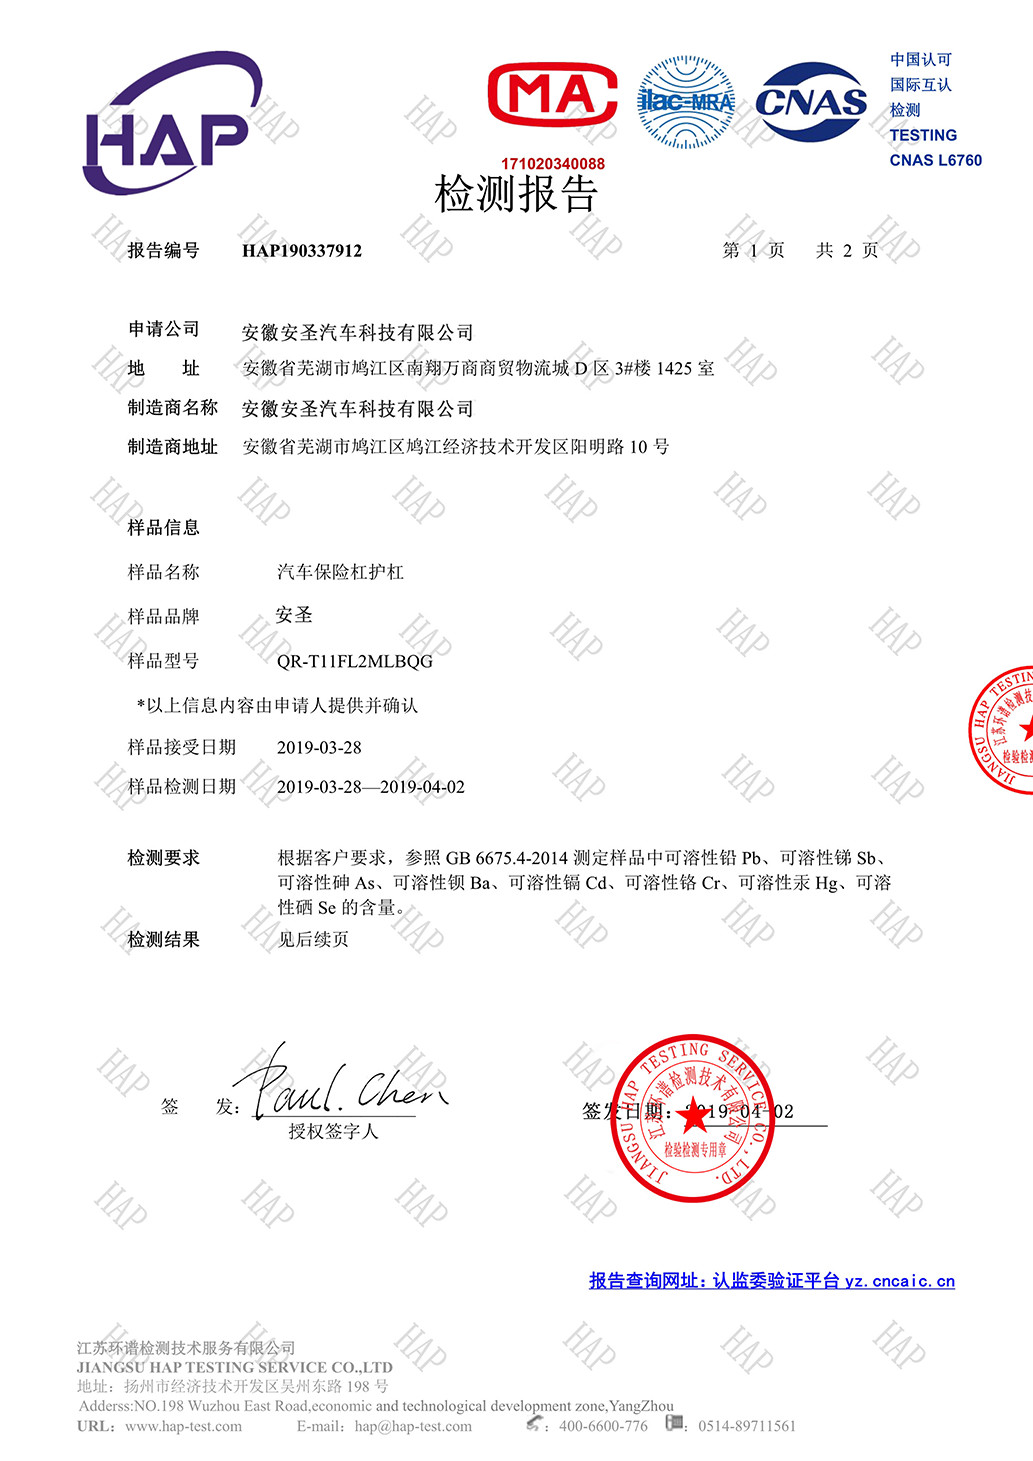 Anhui Ans Auto Technology Co., Ltd. Certifications